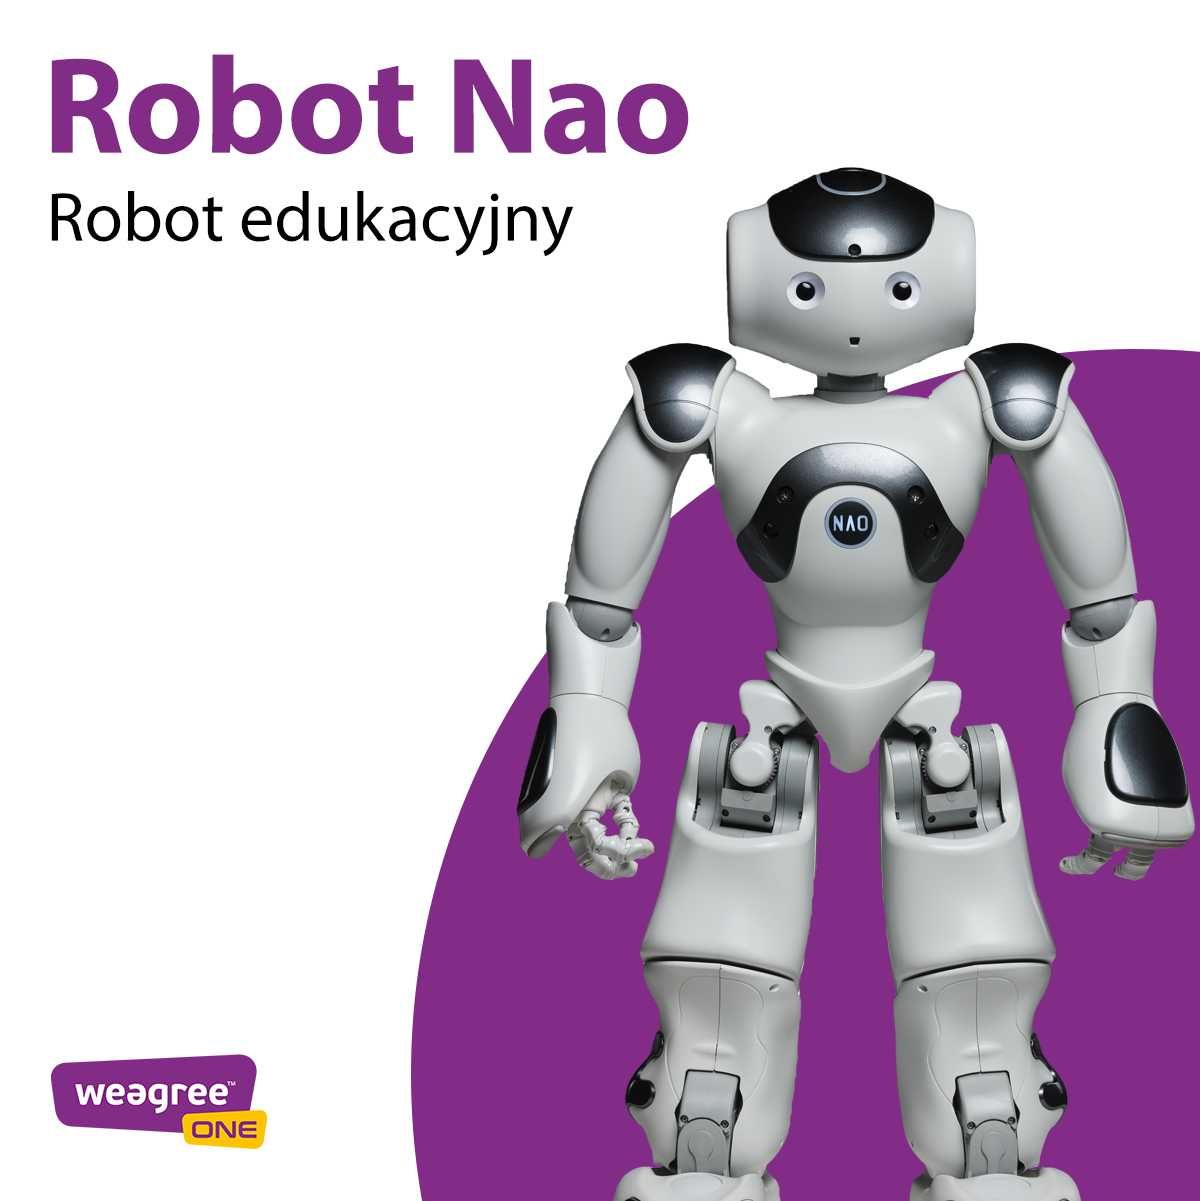 Robot dla szkół Nao - robot do szkoły, uniwersytetu, uczelni